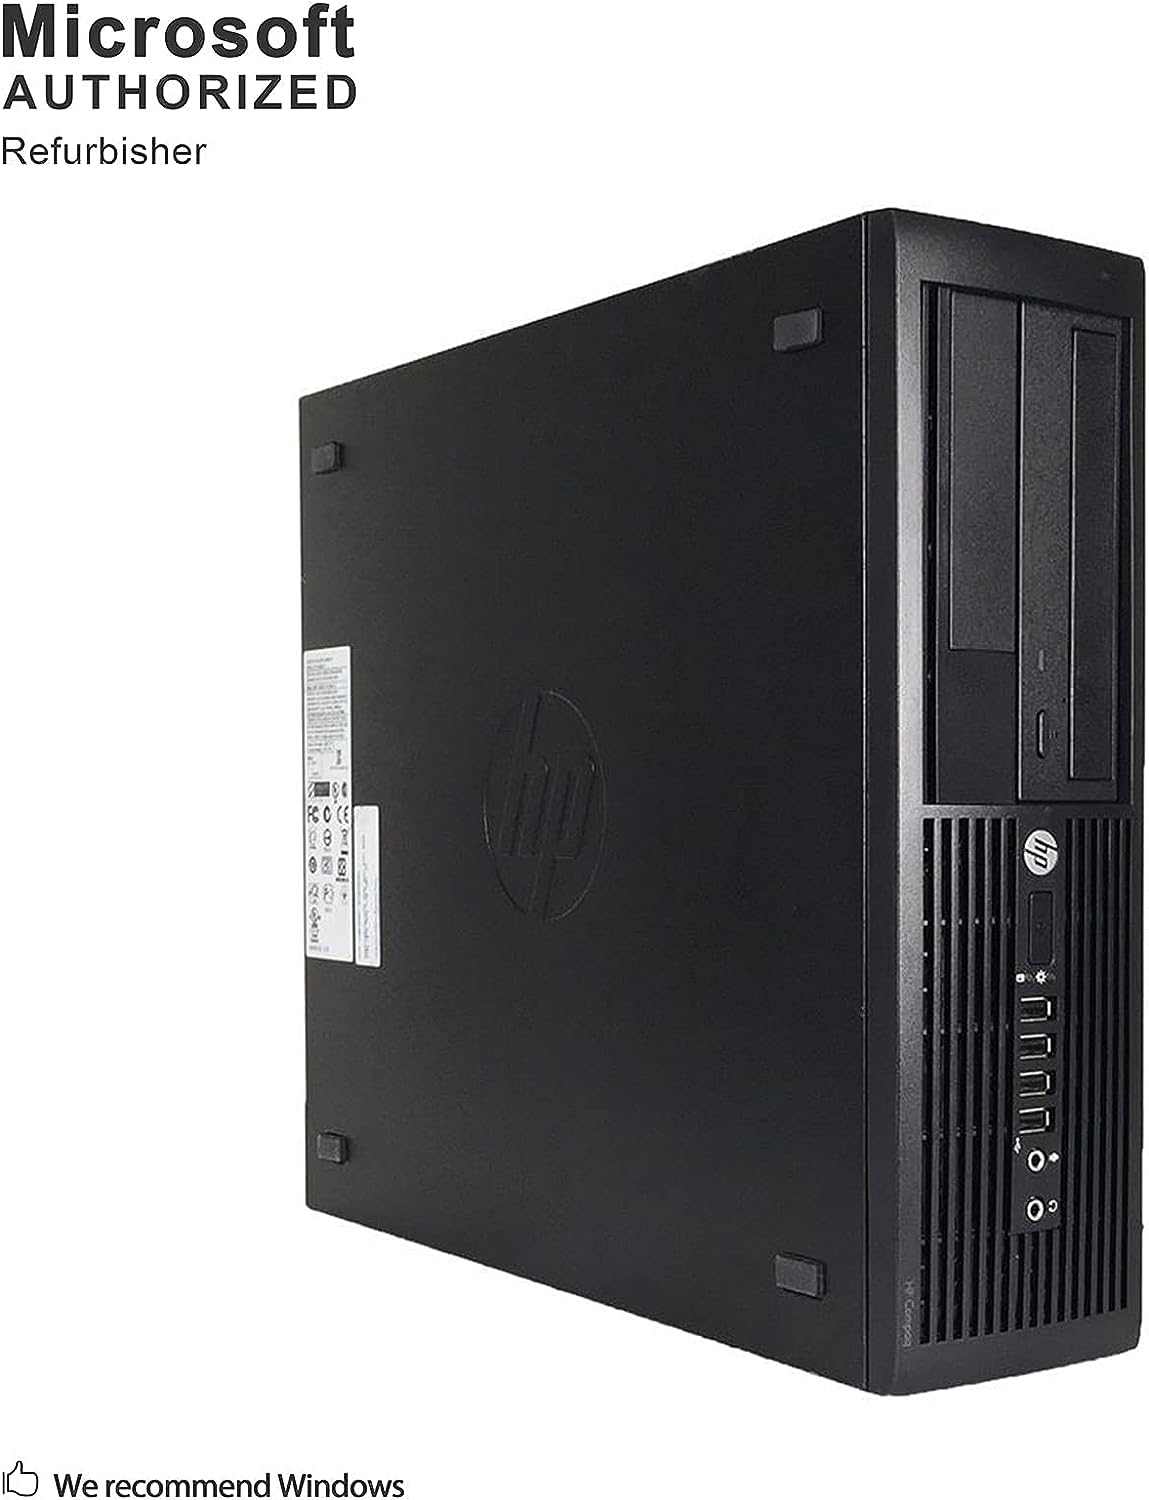 HP Elite Desktop PC Computer | Intel Quad-Core i5 | 8GB Ram | 1TB HDD | 24 Inch LCD Monitor (1080p HDMI), RGB Keyboard + Mouse | Desk Speakers | WiFi + Bluetooth | Windows 10 (Renewed)